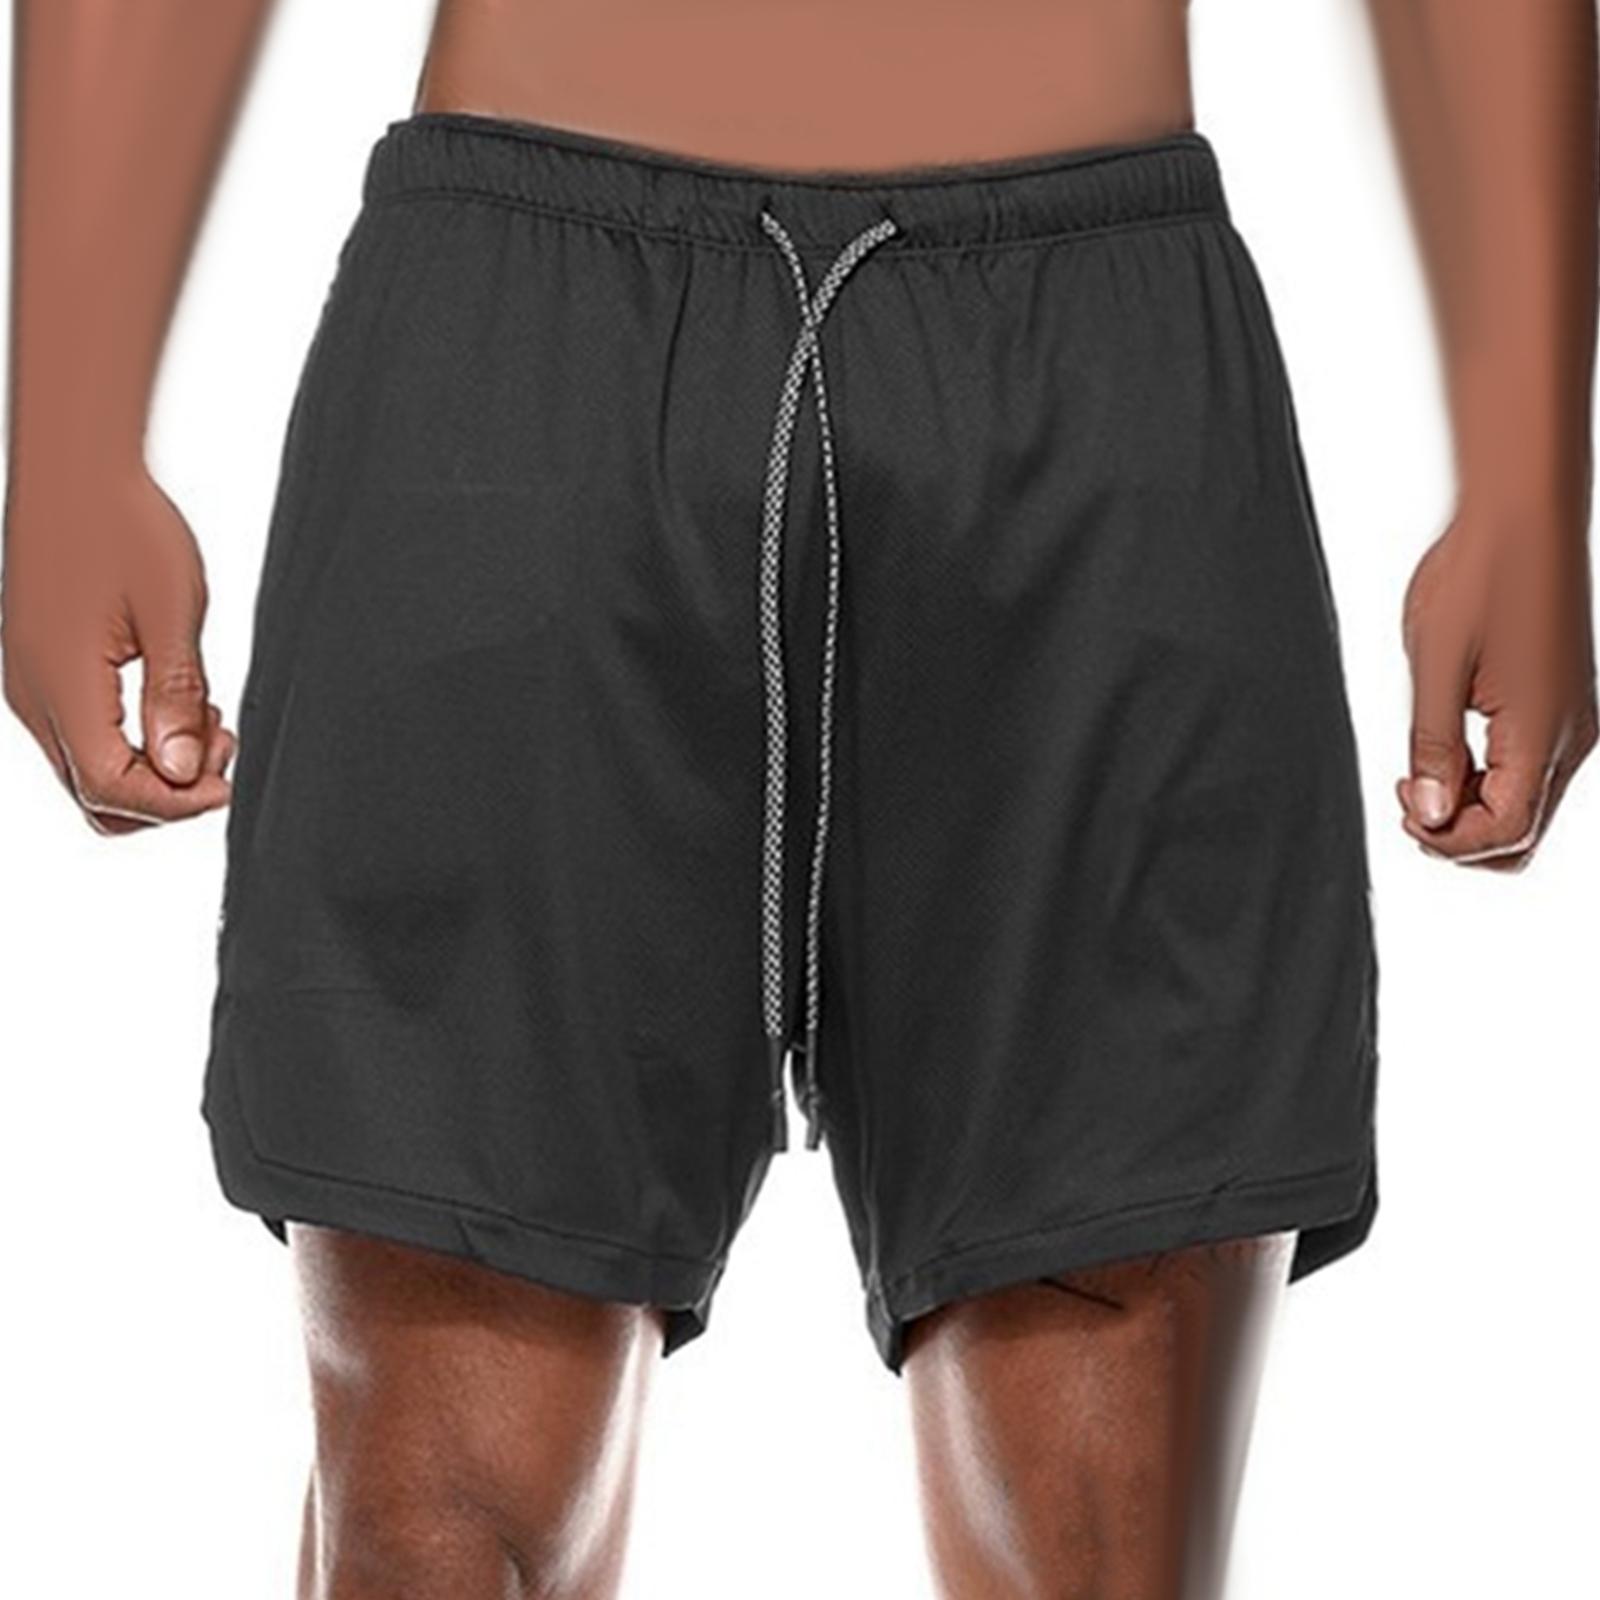 Men's 2 in 1 Running Shorts Summer Sports Shorts for Yoga Sports Training Black XL